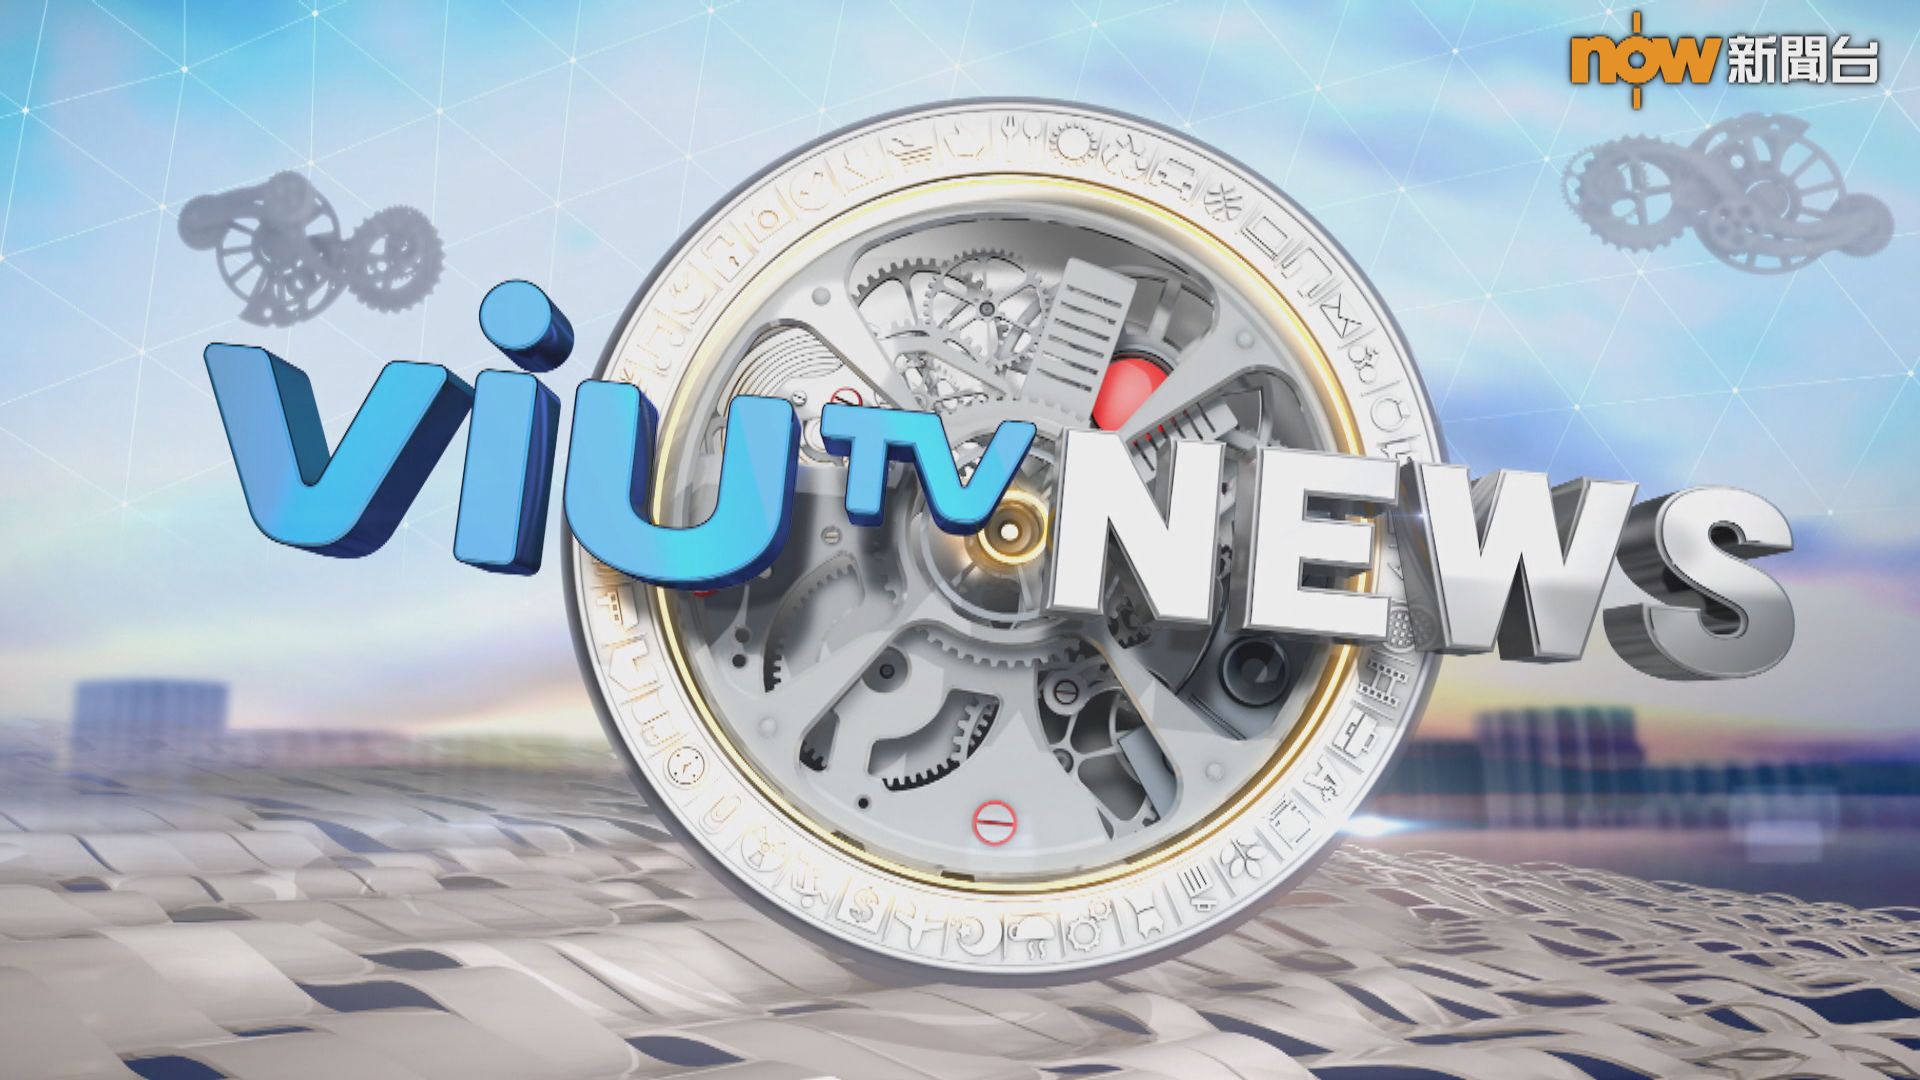 ViuTV News | News Bulletin at 11pm (3.4.2023)